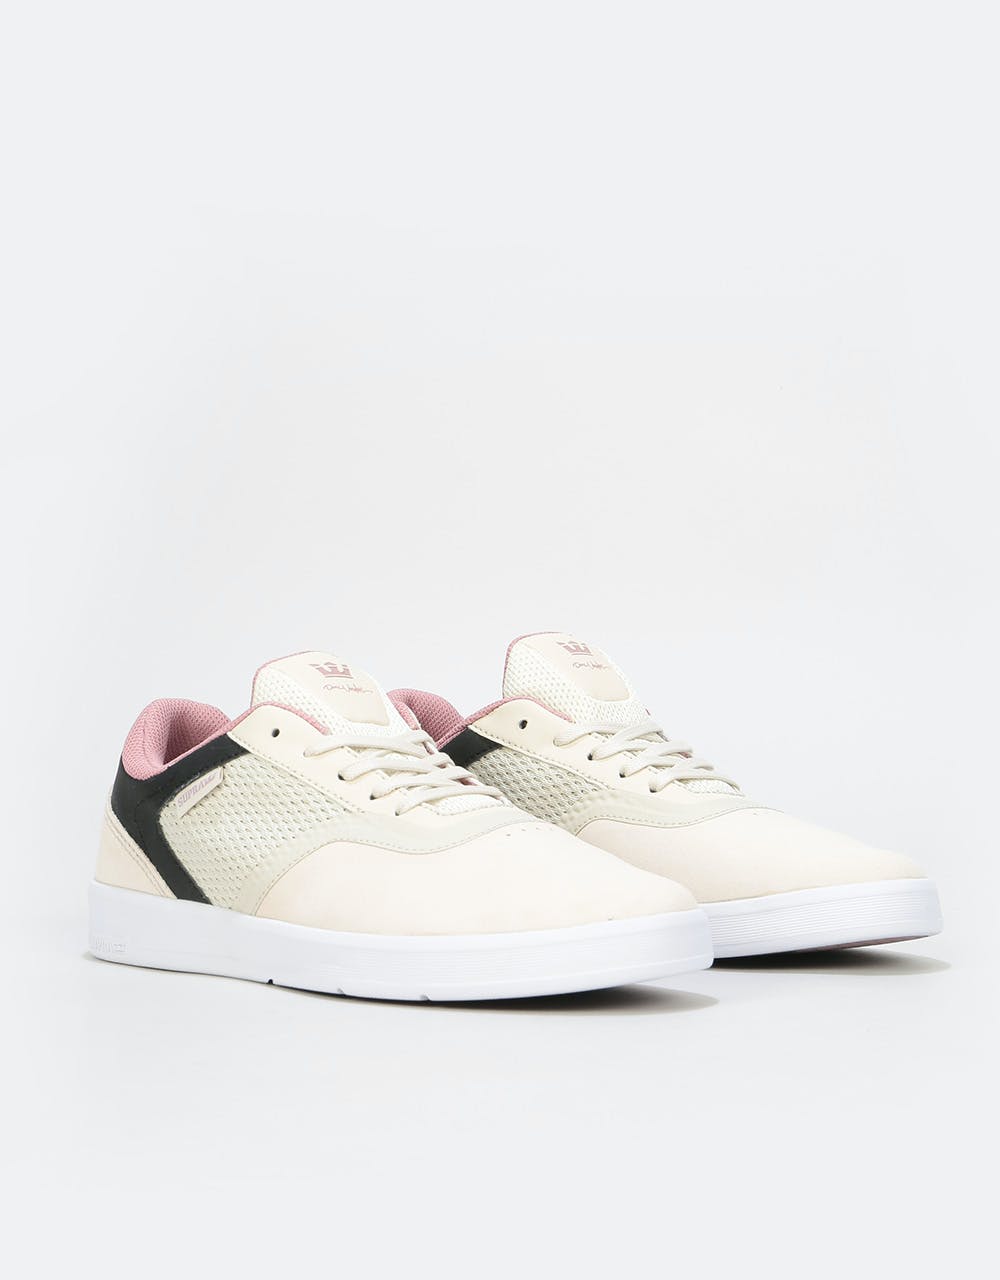 Supra Saint Skate Shoes - Bone/Black-White